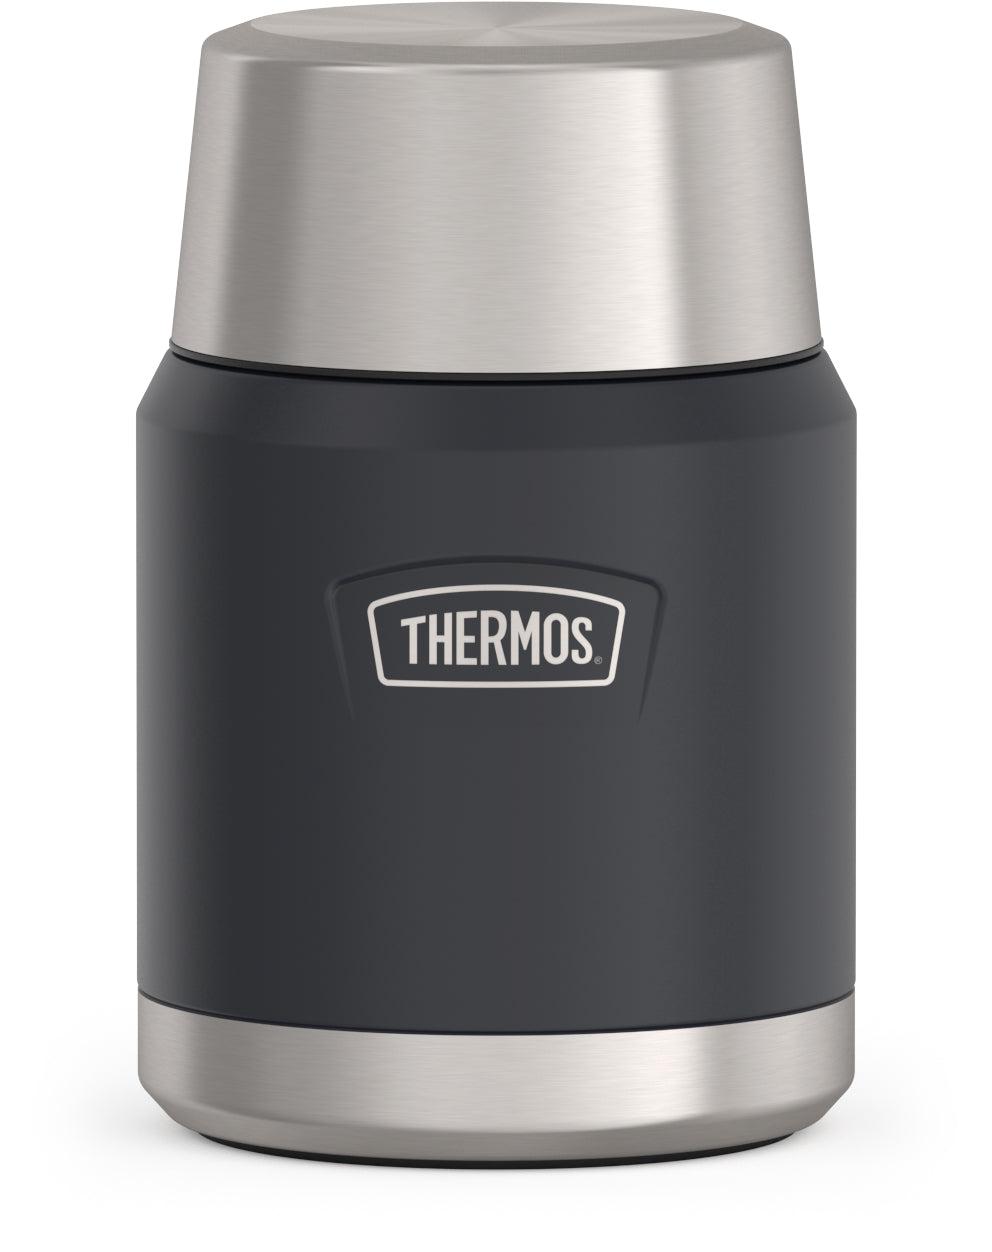 Thermos 24 oz. Icon Stainless Steel Food Jar - Glacier